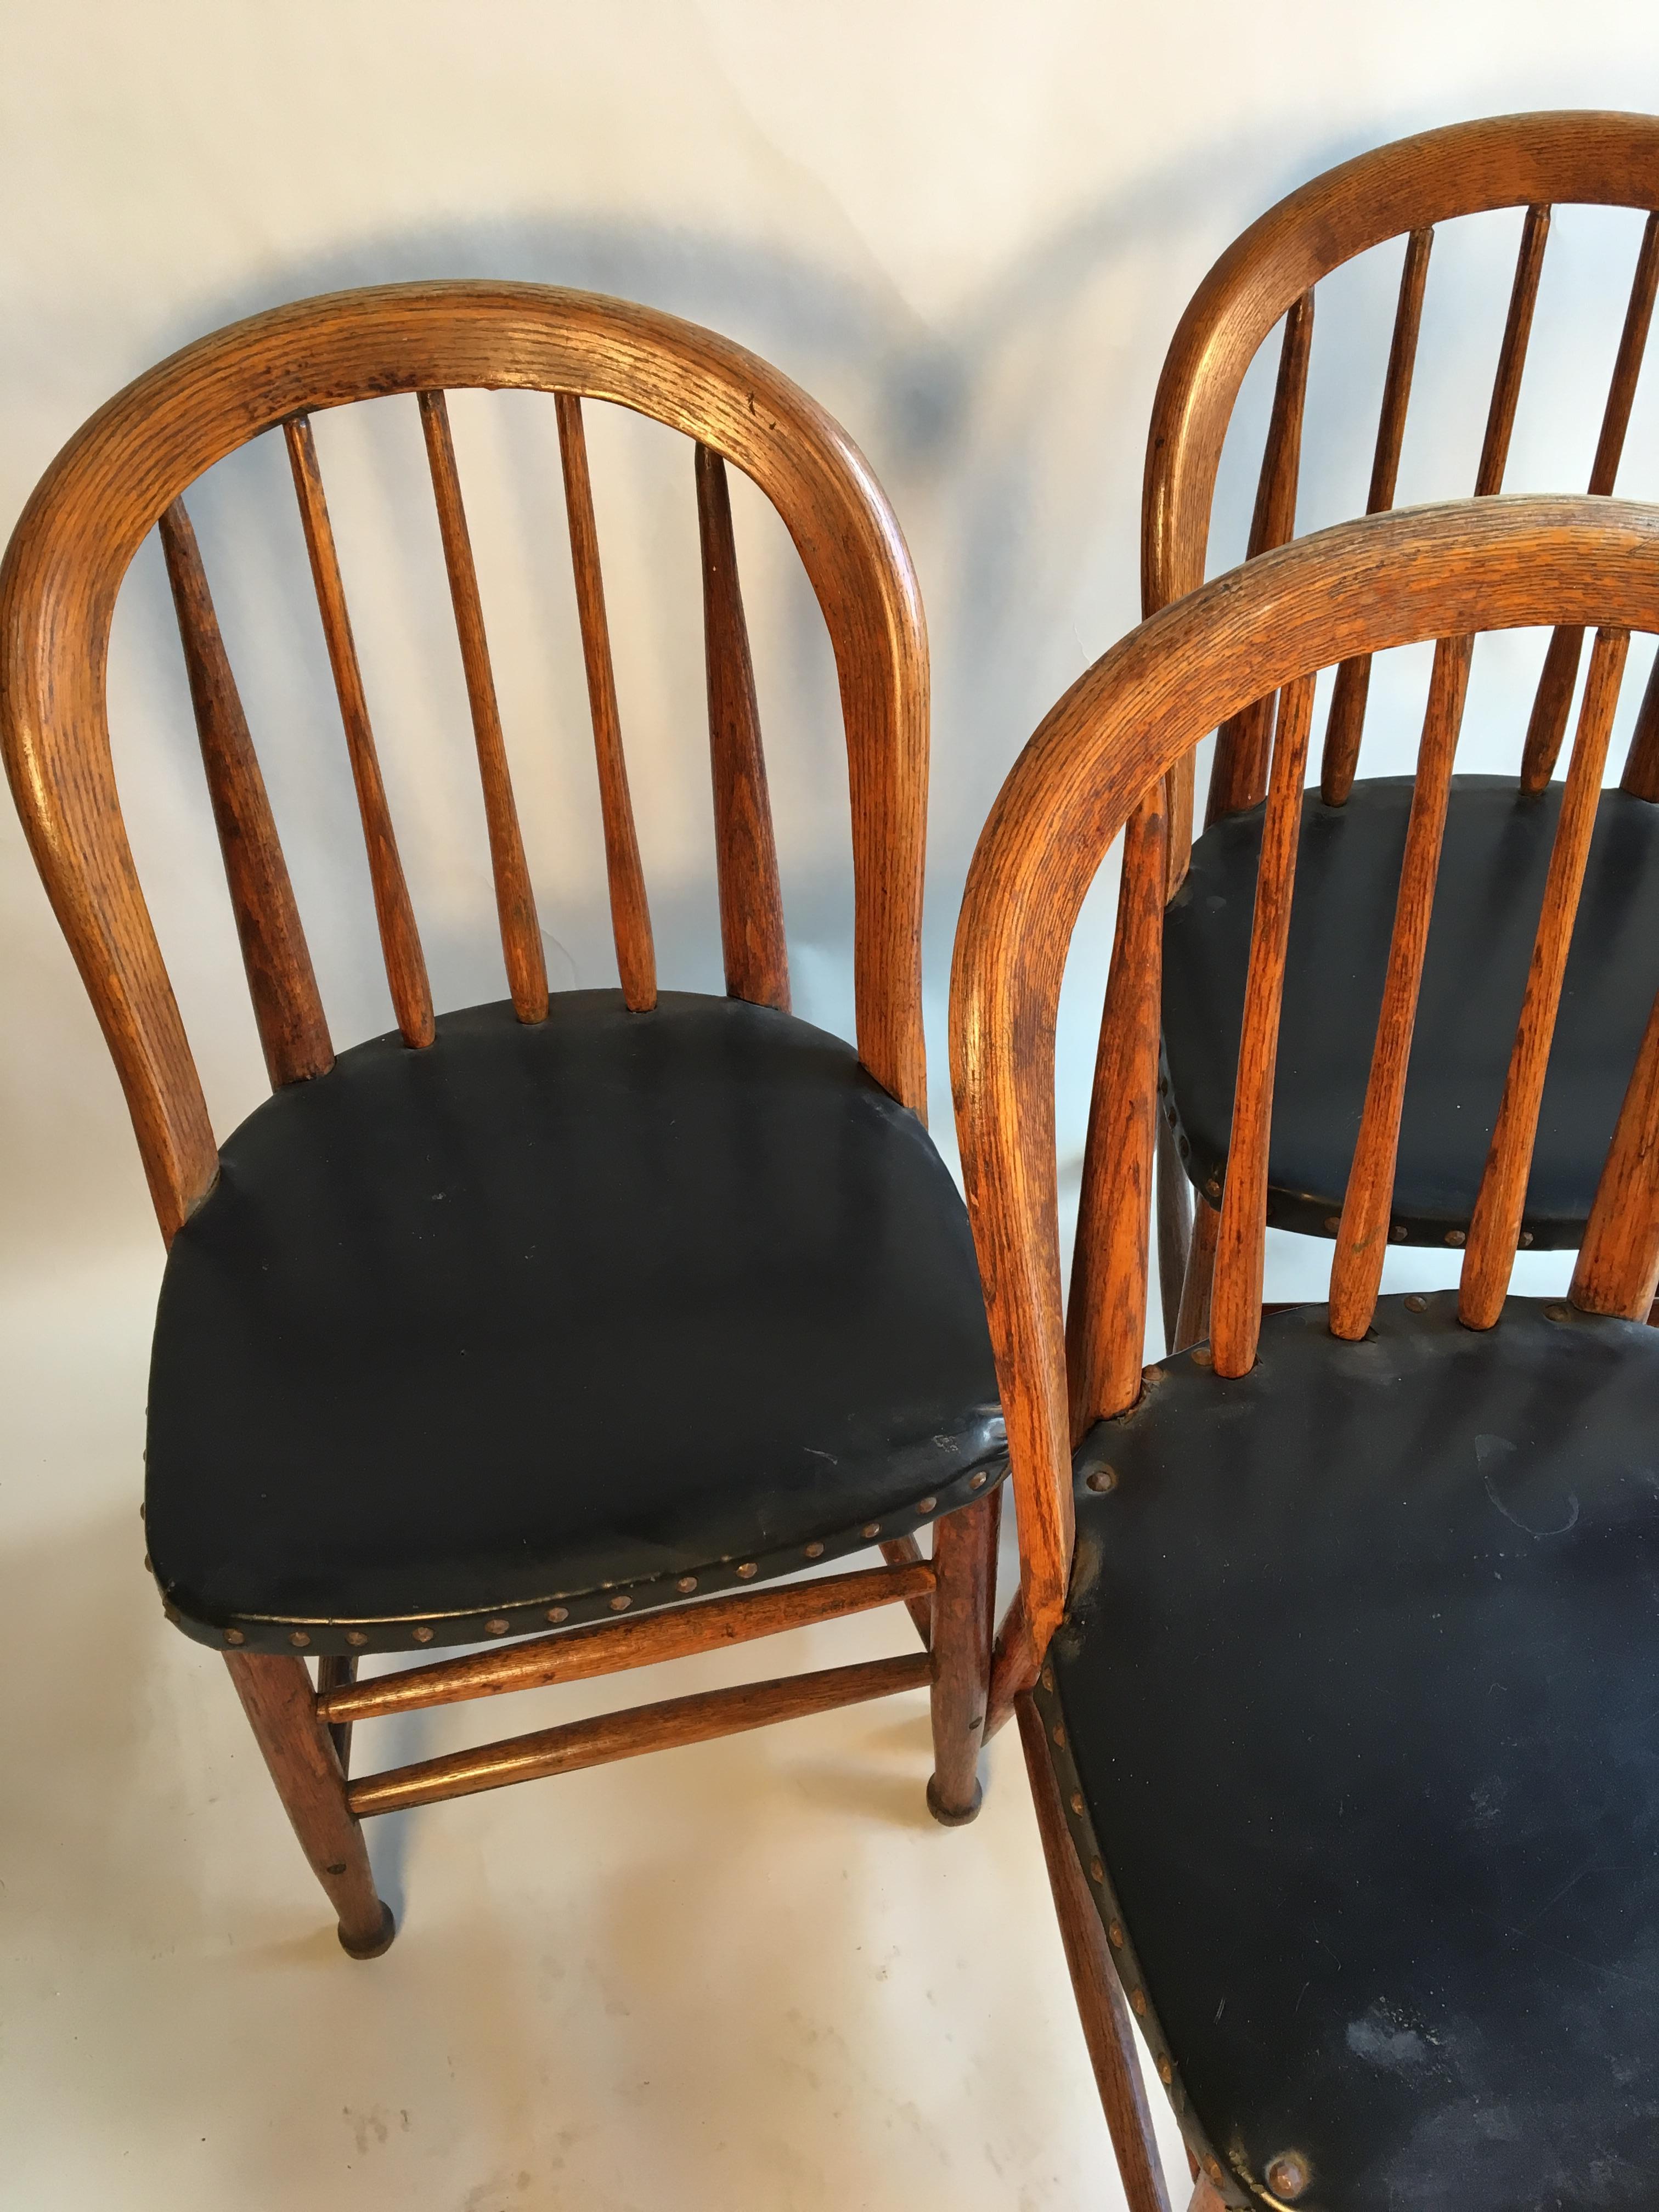 A set of 4 oak barrel-back chairs with black vinyl seats, circa 1880, American.